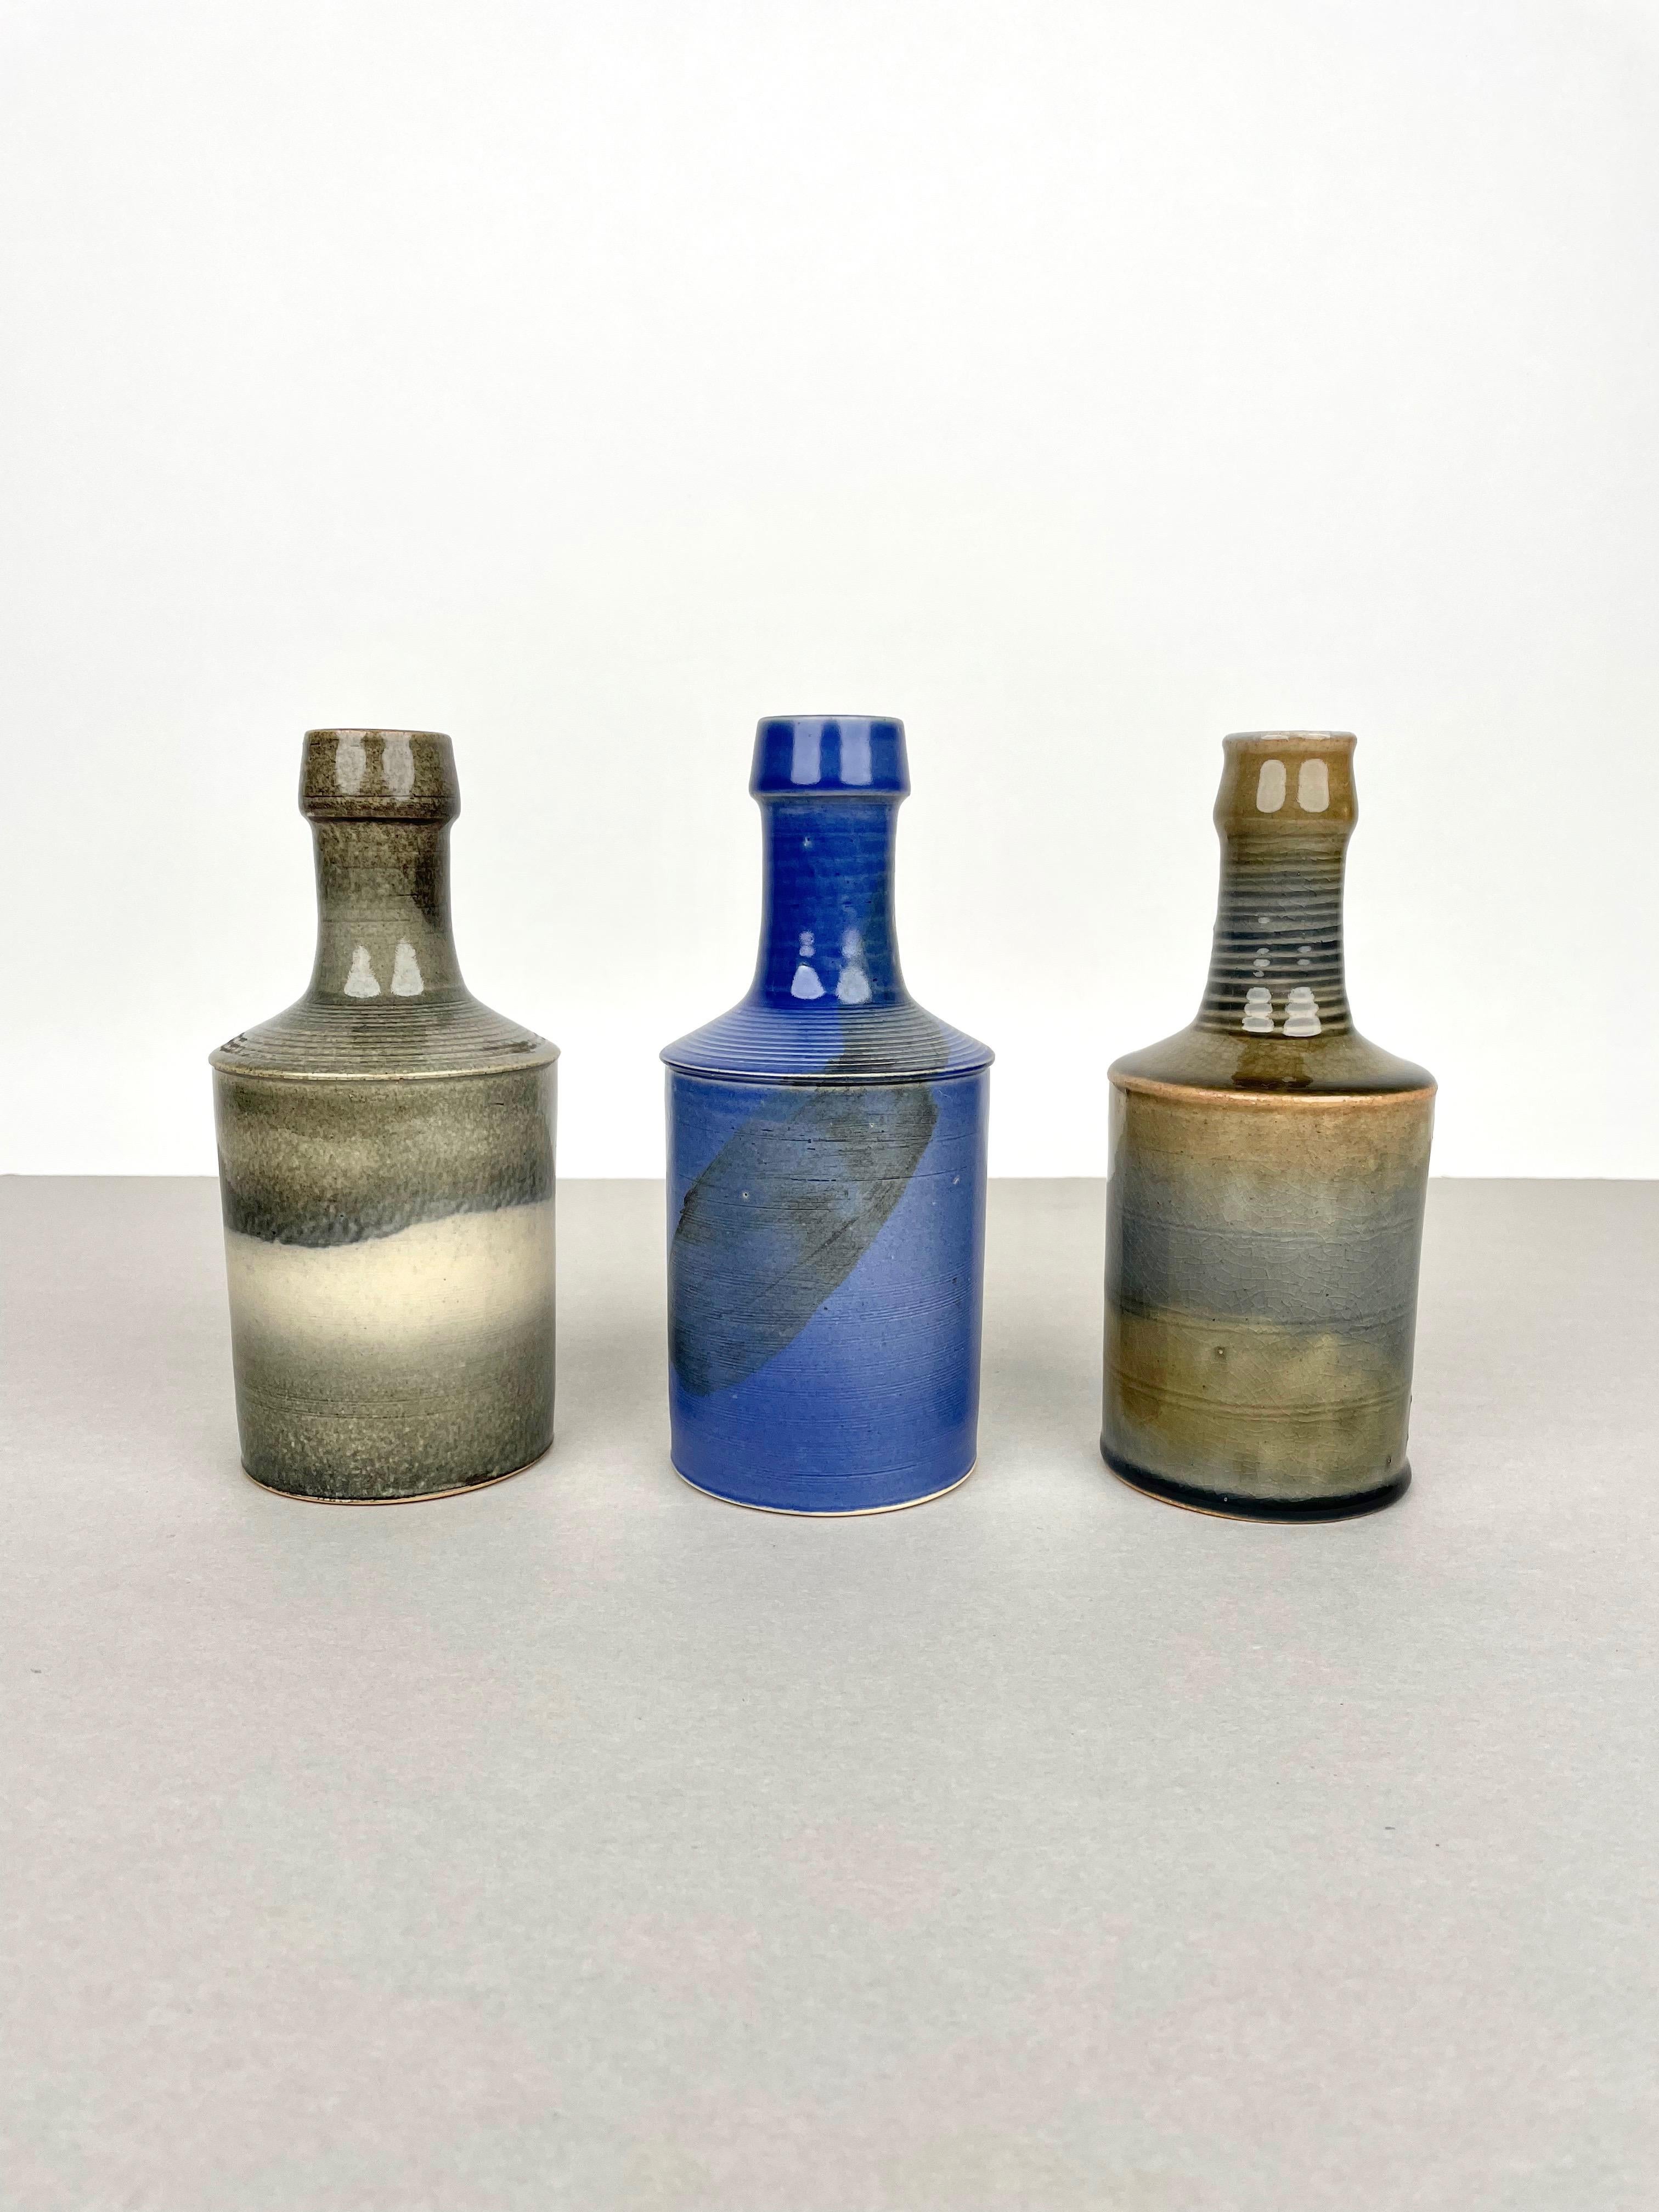 Set of three ceramics bottles vases in lacquered ceramics by the Italian designer Nanni Valentini for Franco Bucci / Laboratorio Pesaro. 

Made in Italy in the 1960s.